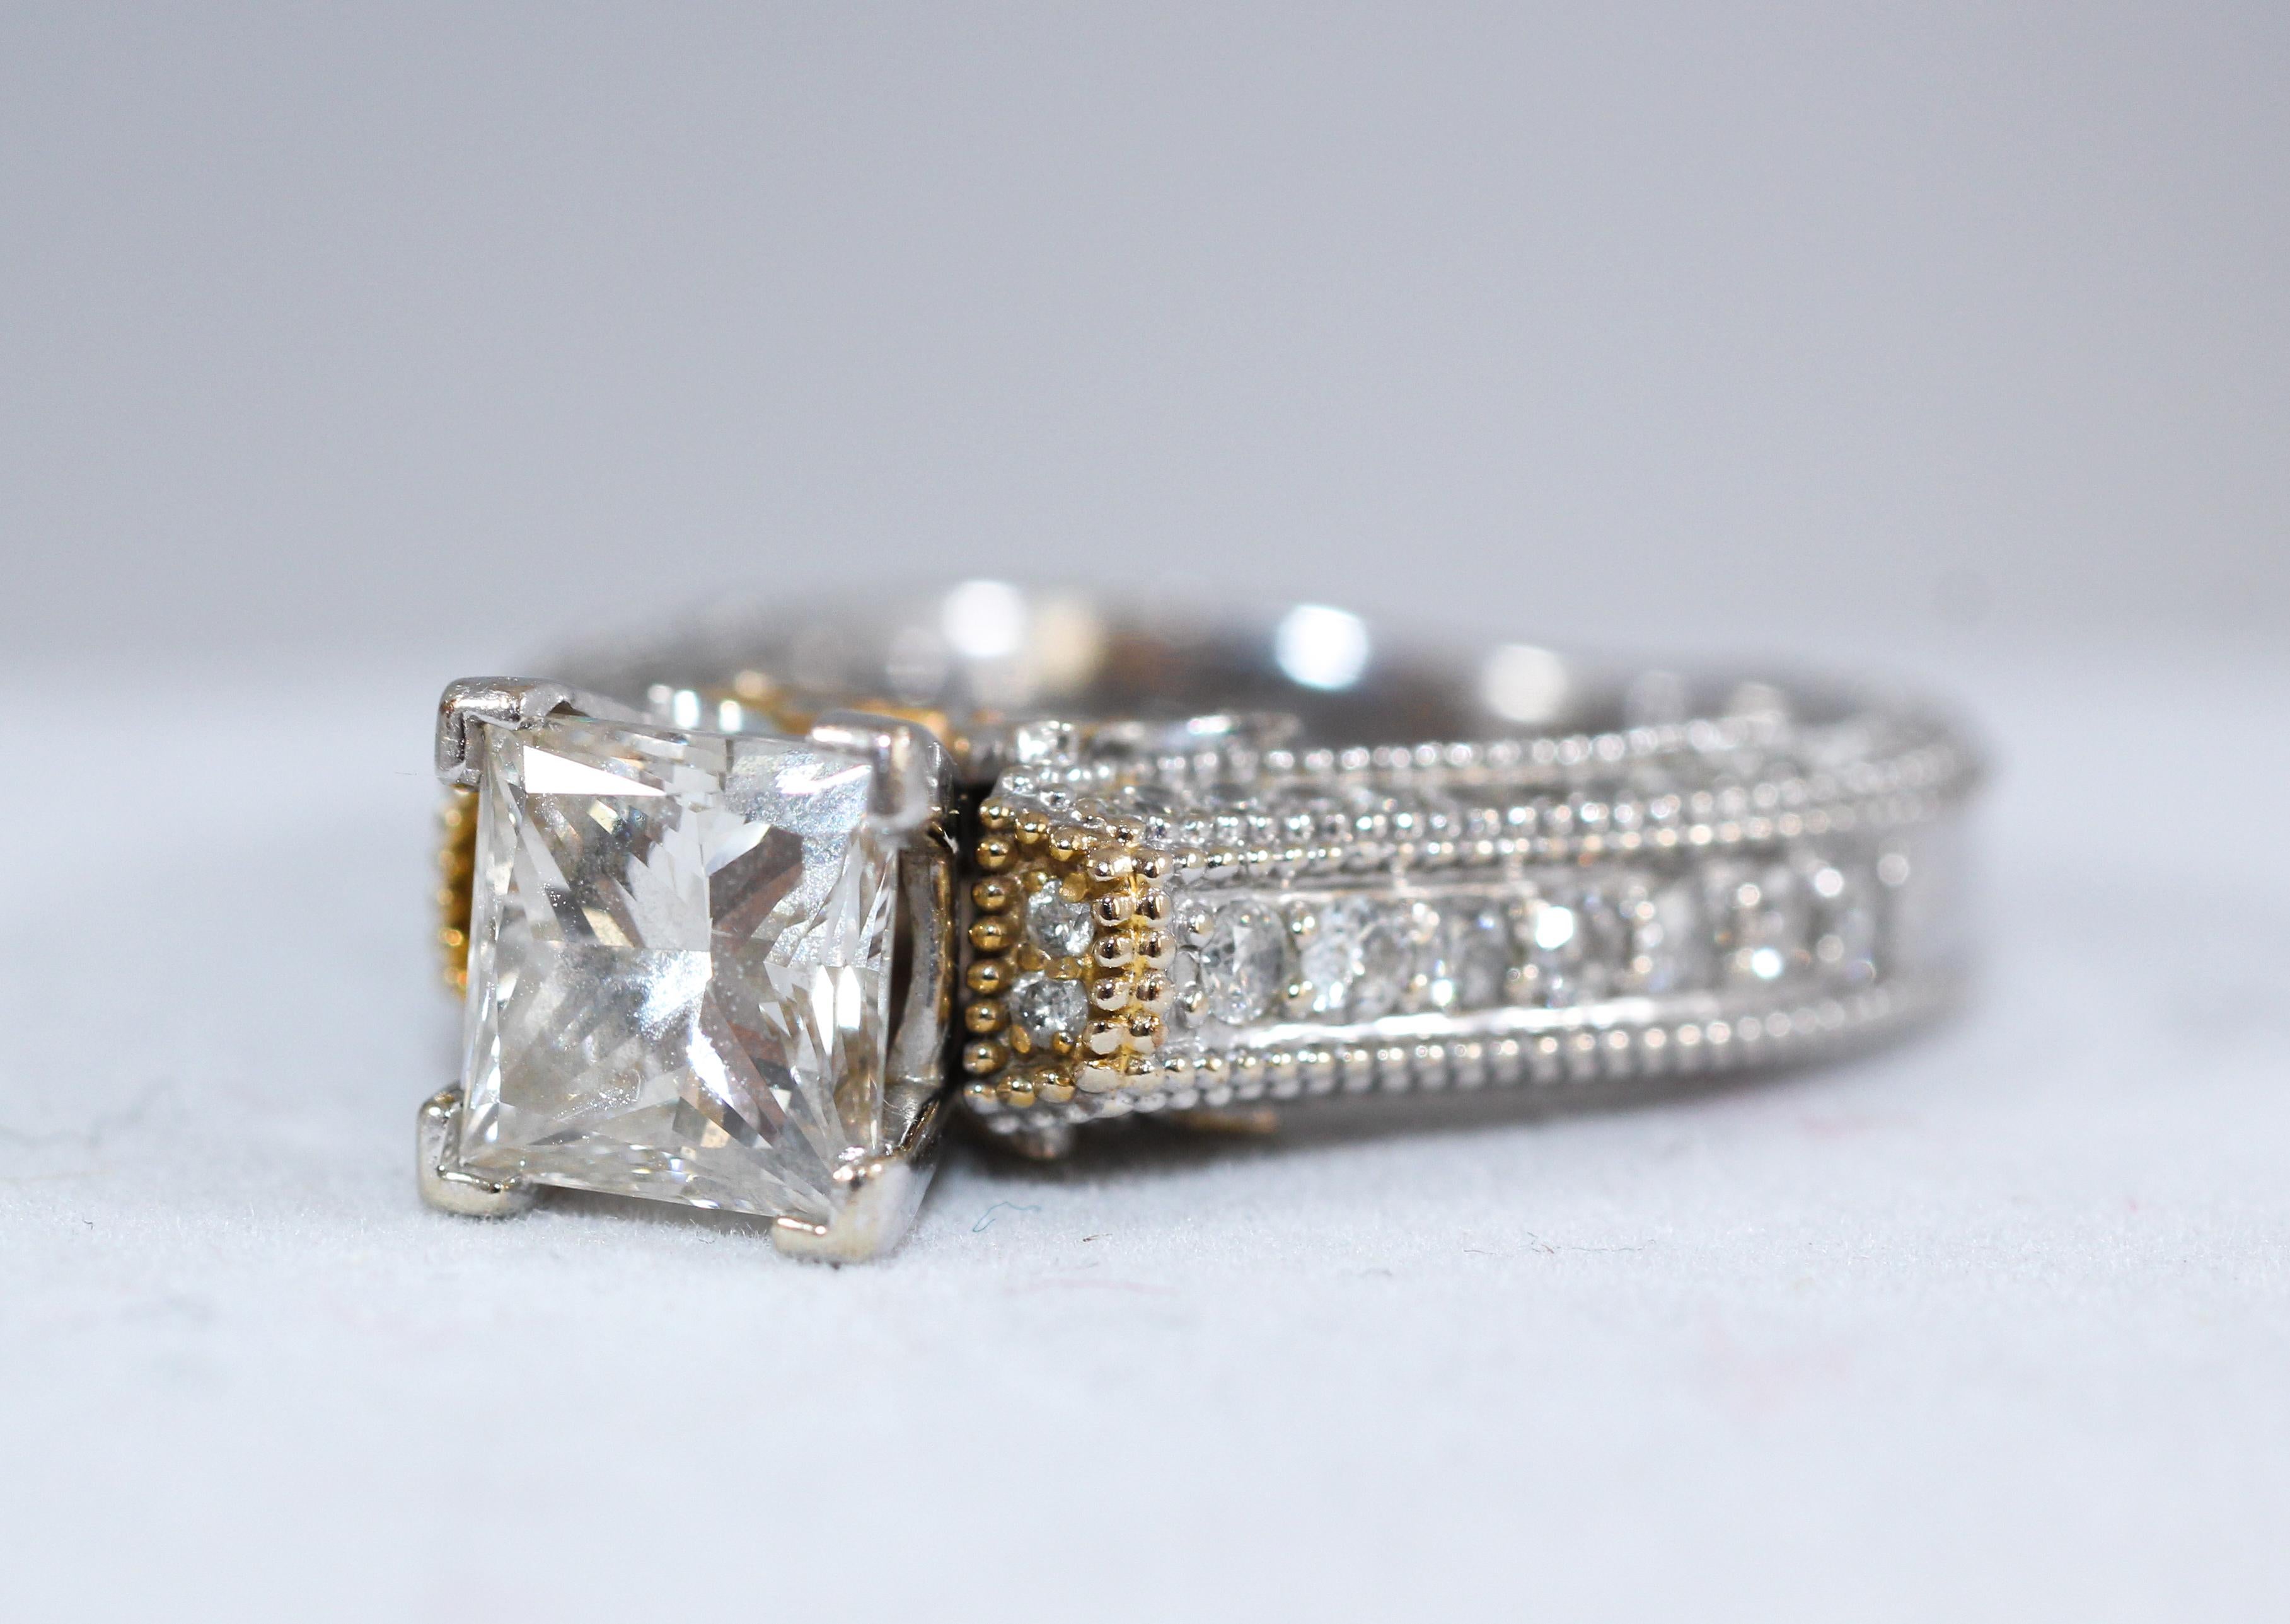 1.7 carat princess cut diamond ring